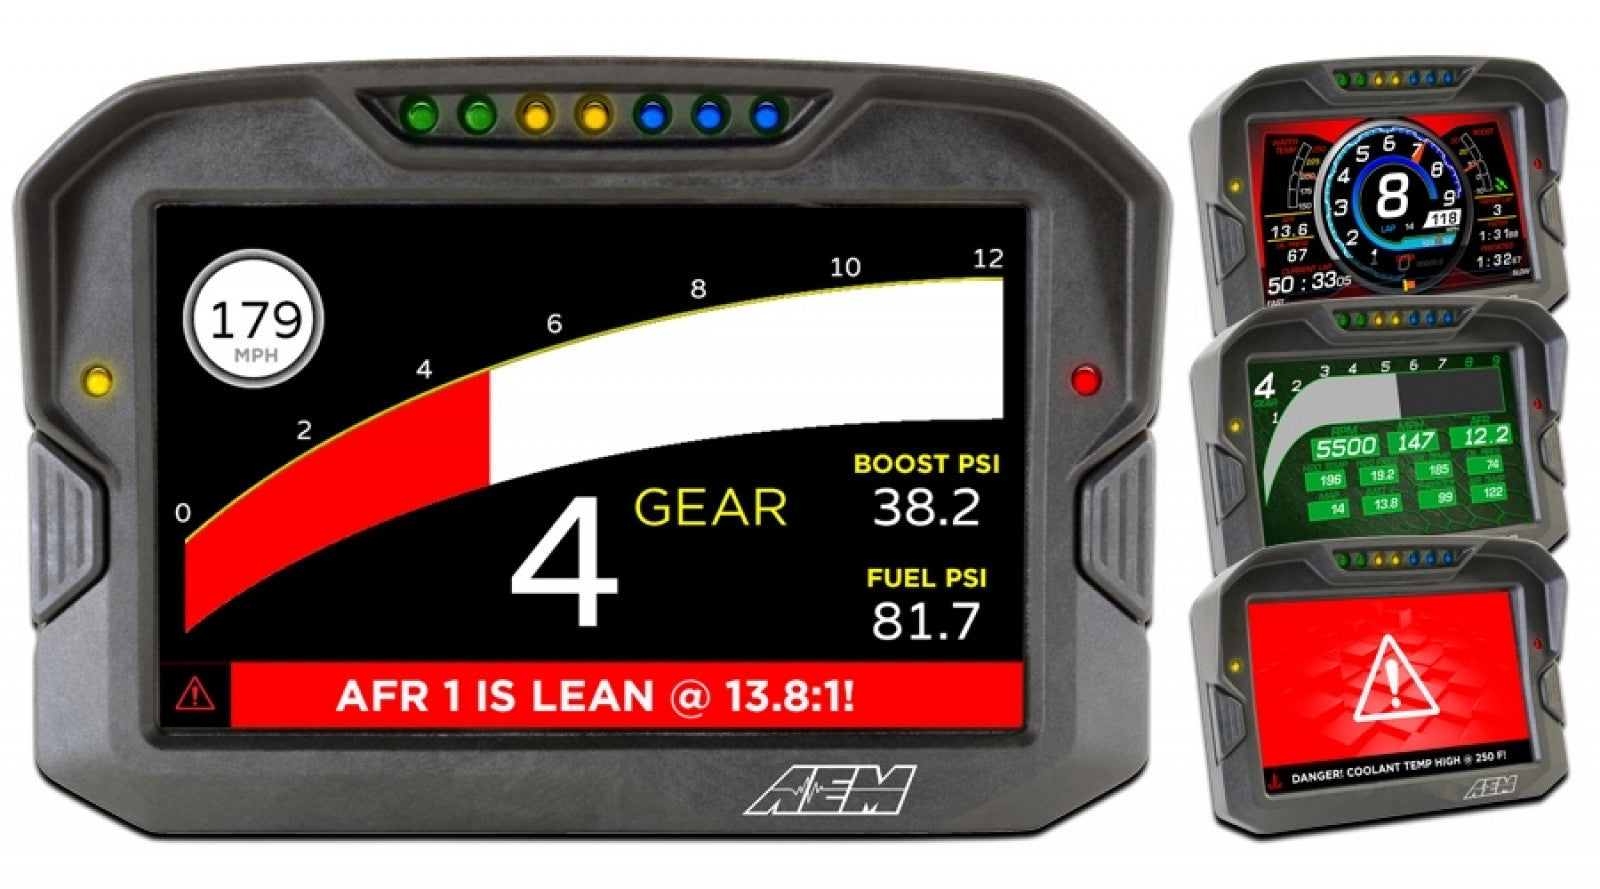 AEM Non-Logging/GPS Enabled CD-7 Carbon Digital Racing Dash